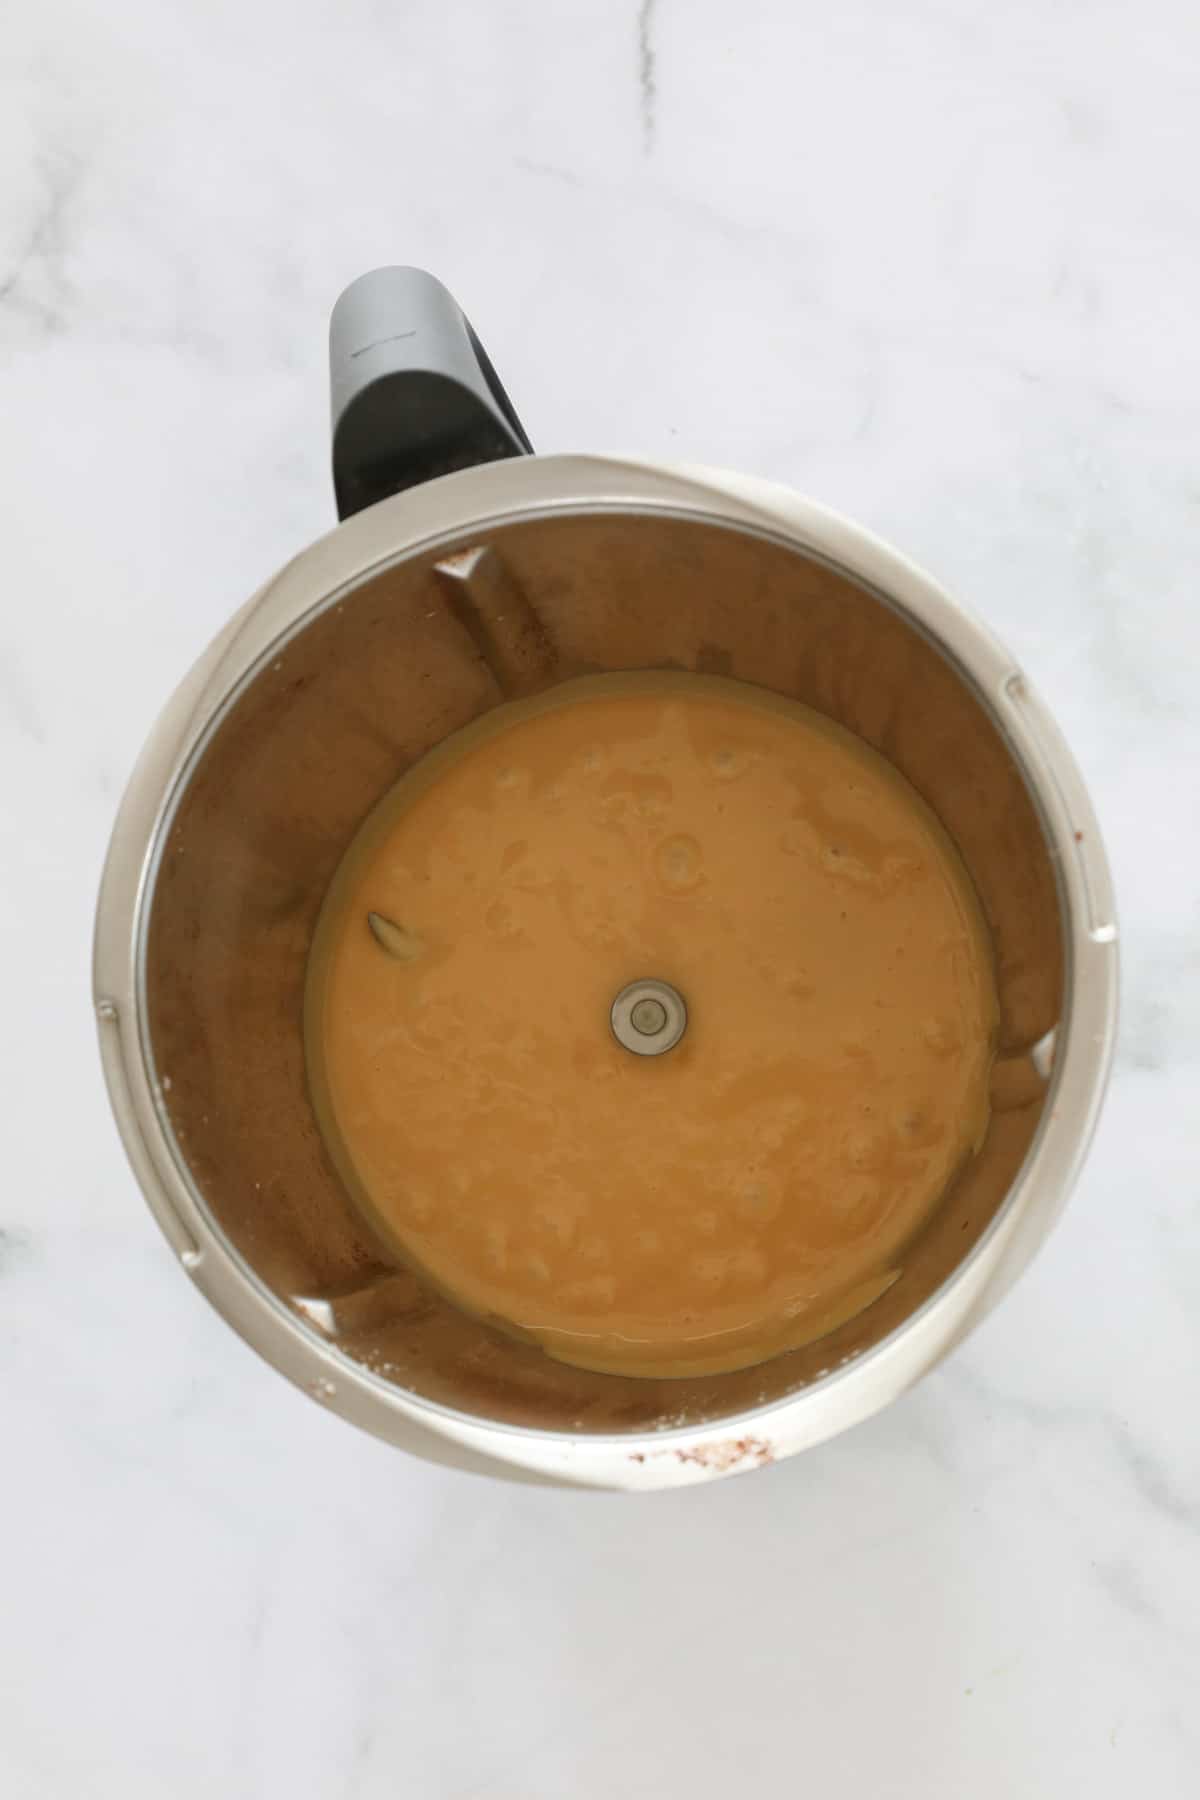 Hot fudge liquid in a Thermomix bowl.